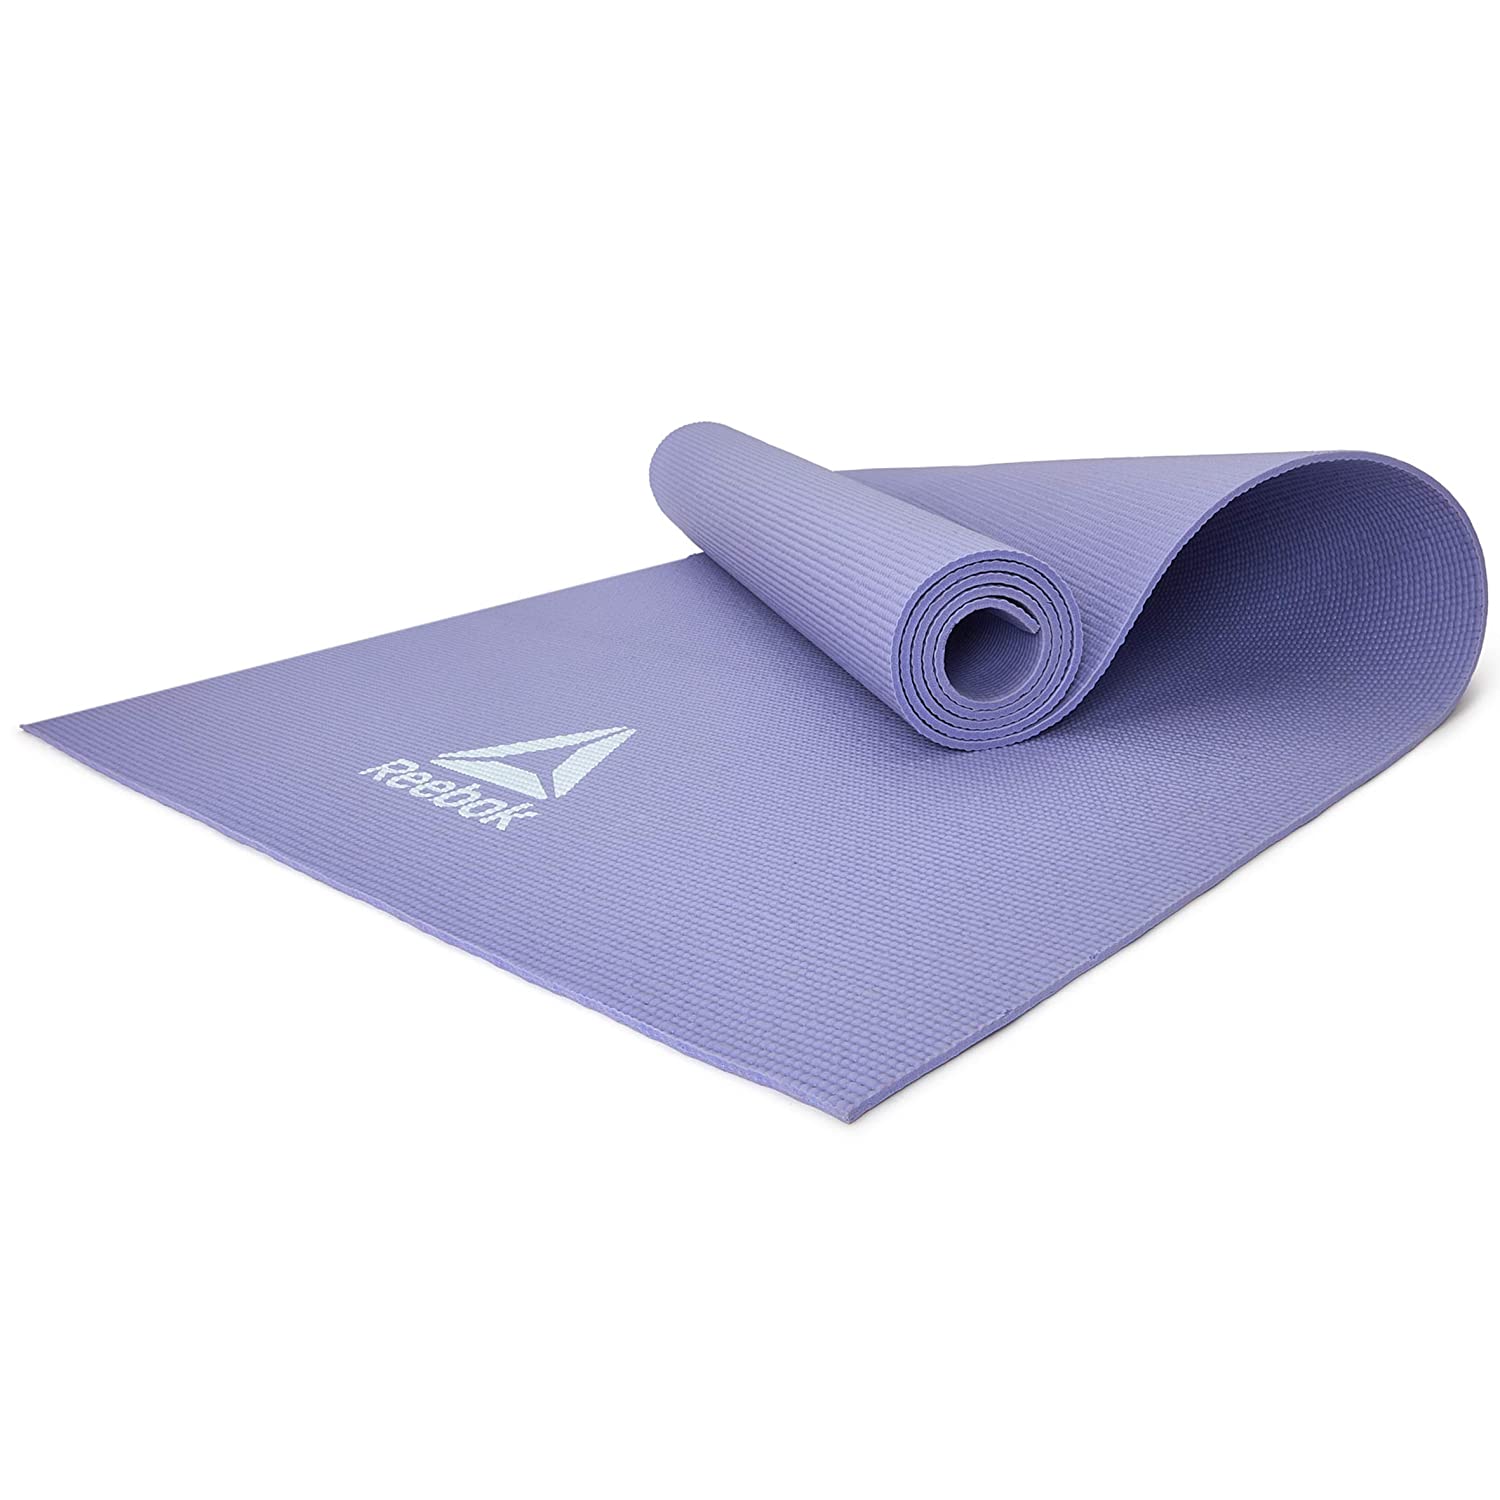 Reebok RAYG11022 PVC Yoga Mat - 4 MM (Purple) - Best Price online Prokicksports.com